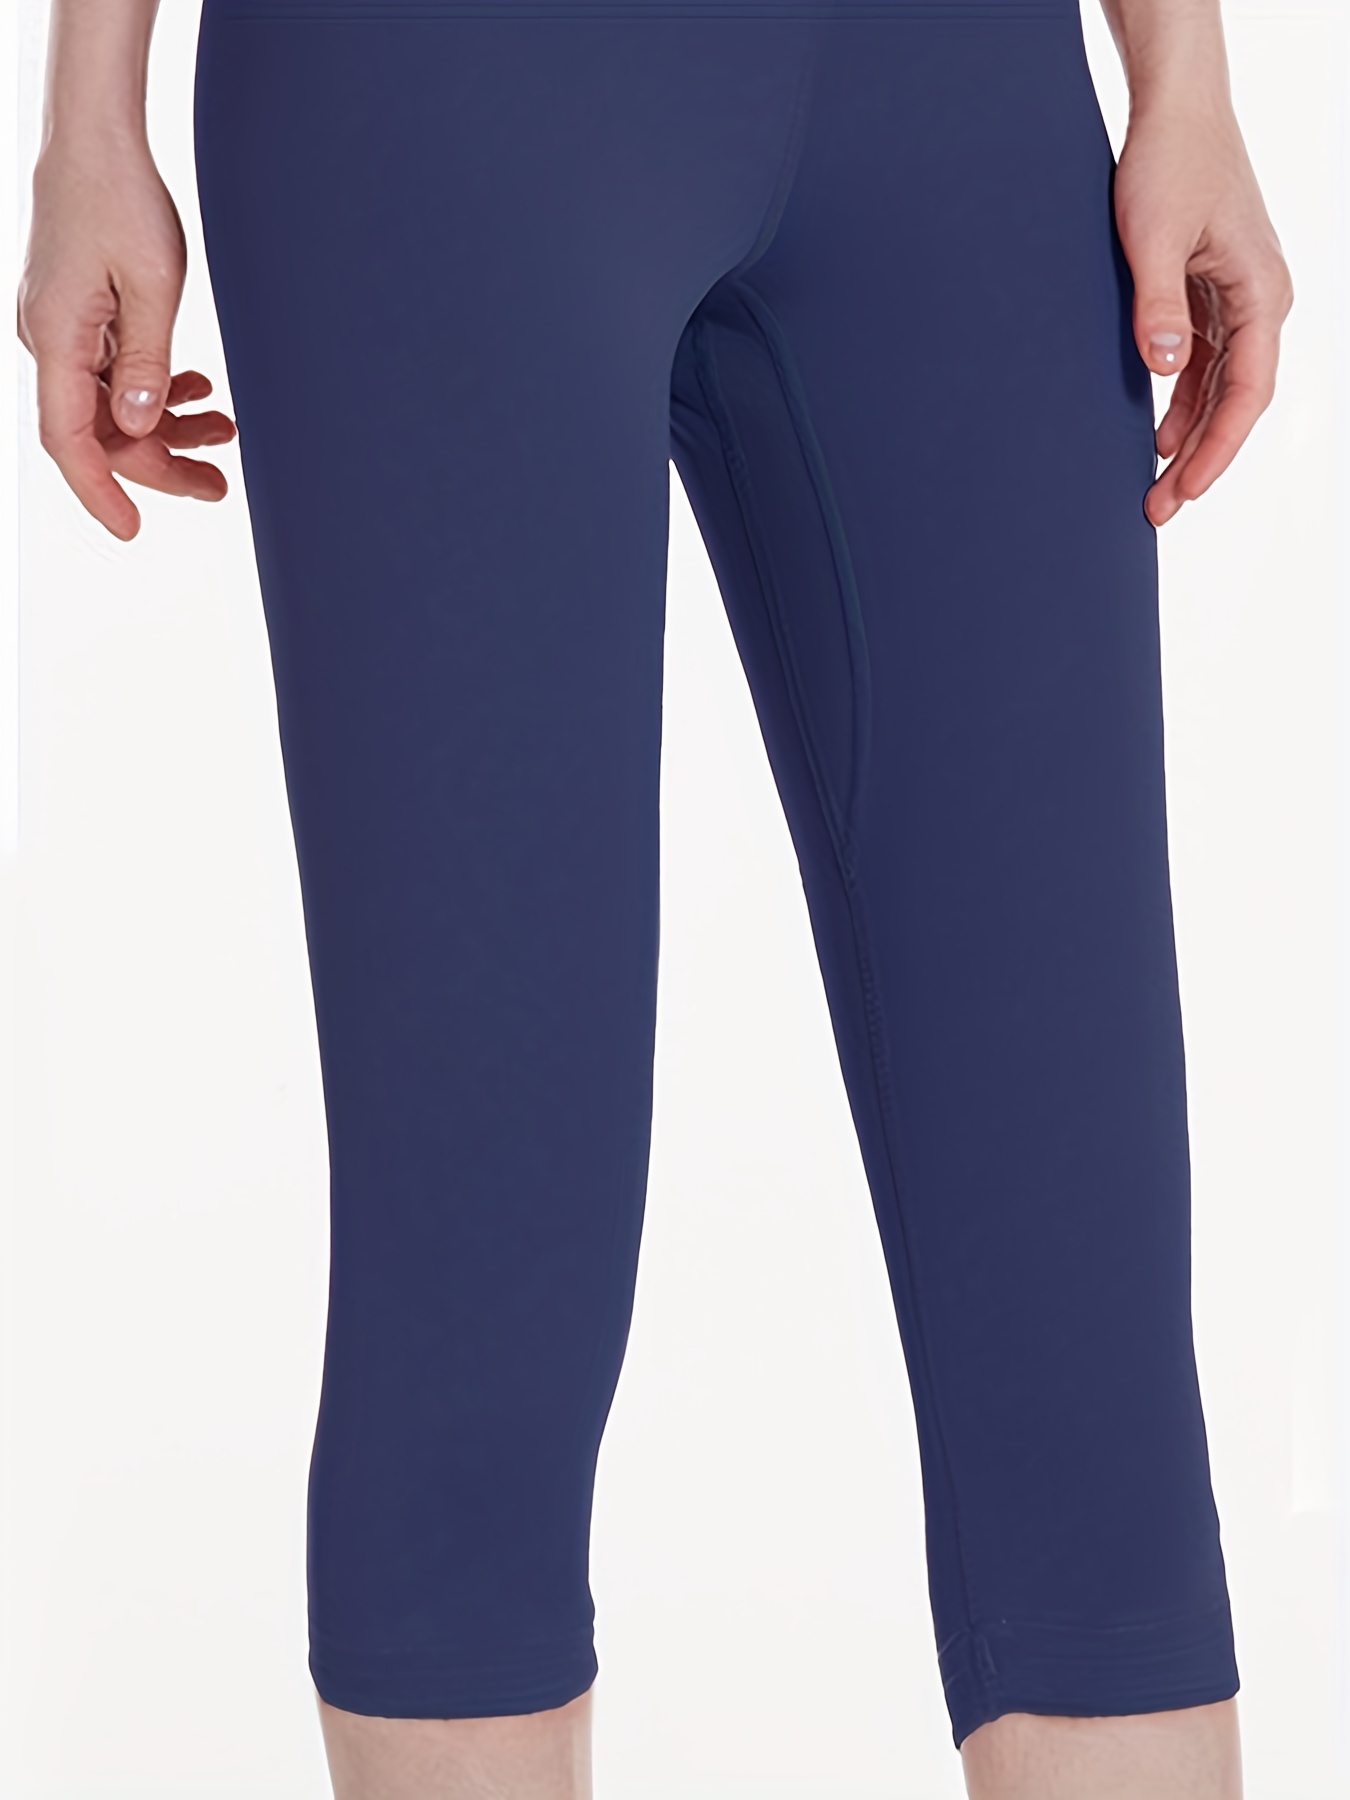 Soft High Waisted Yoga Leggings - Capri Short Length Leggings - Tight  Sports Pants - Yoga Pants - Workout Leggings - PeachJoy